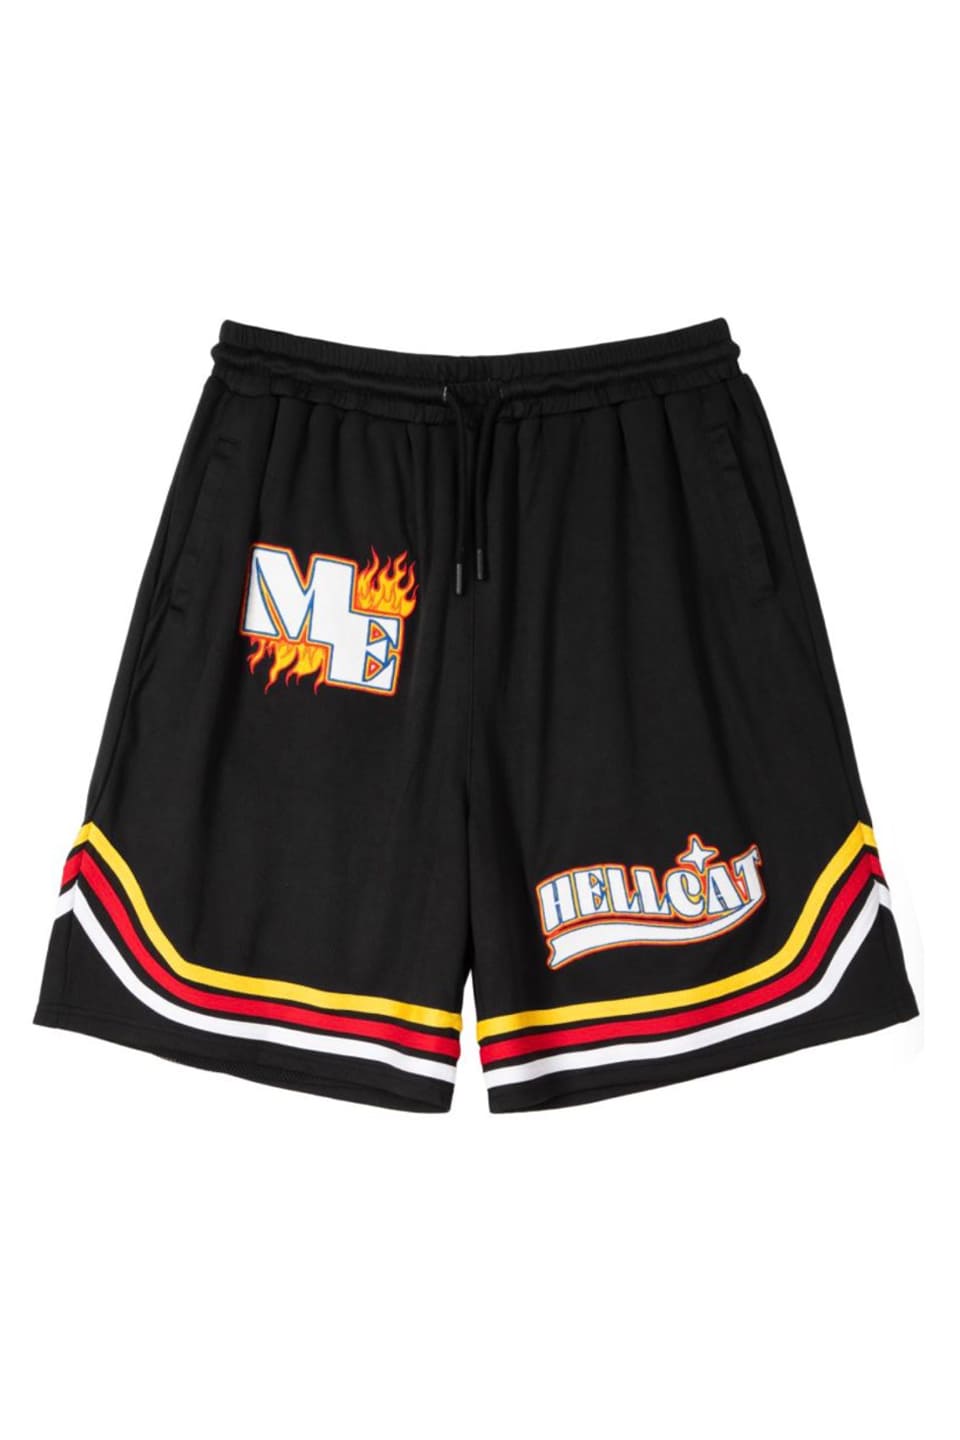 Heat Basket Shorts